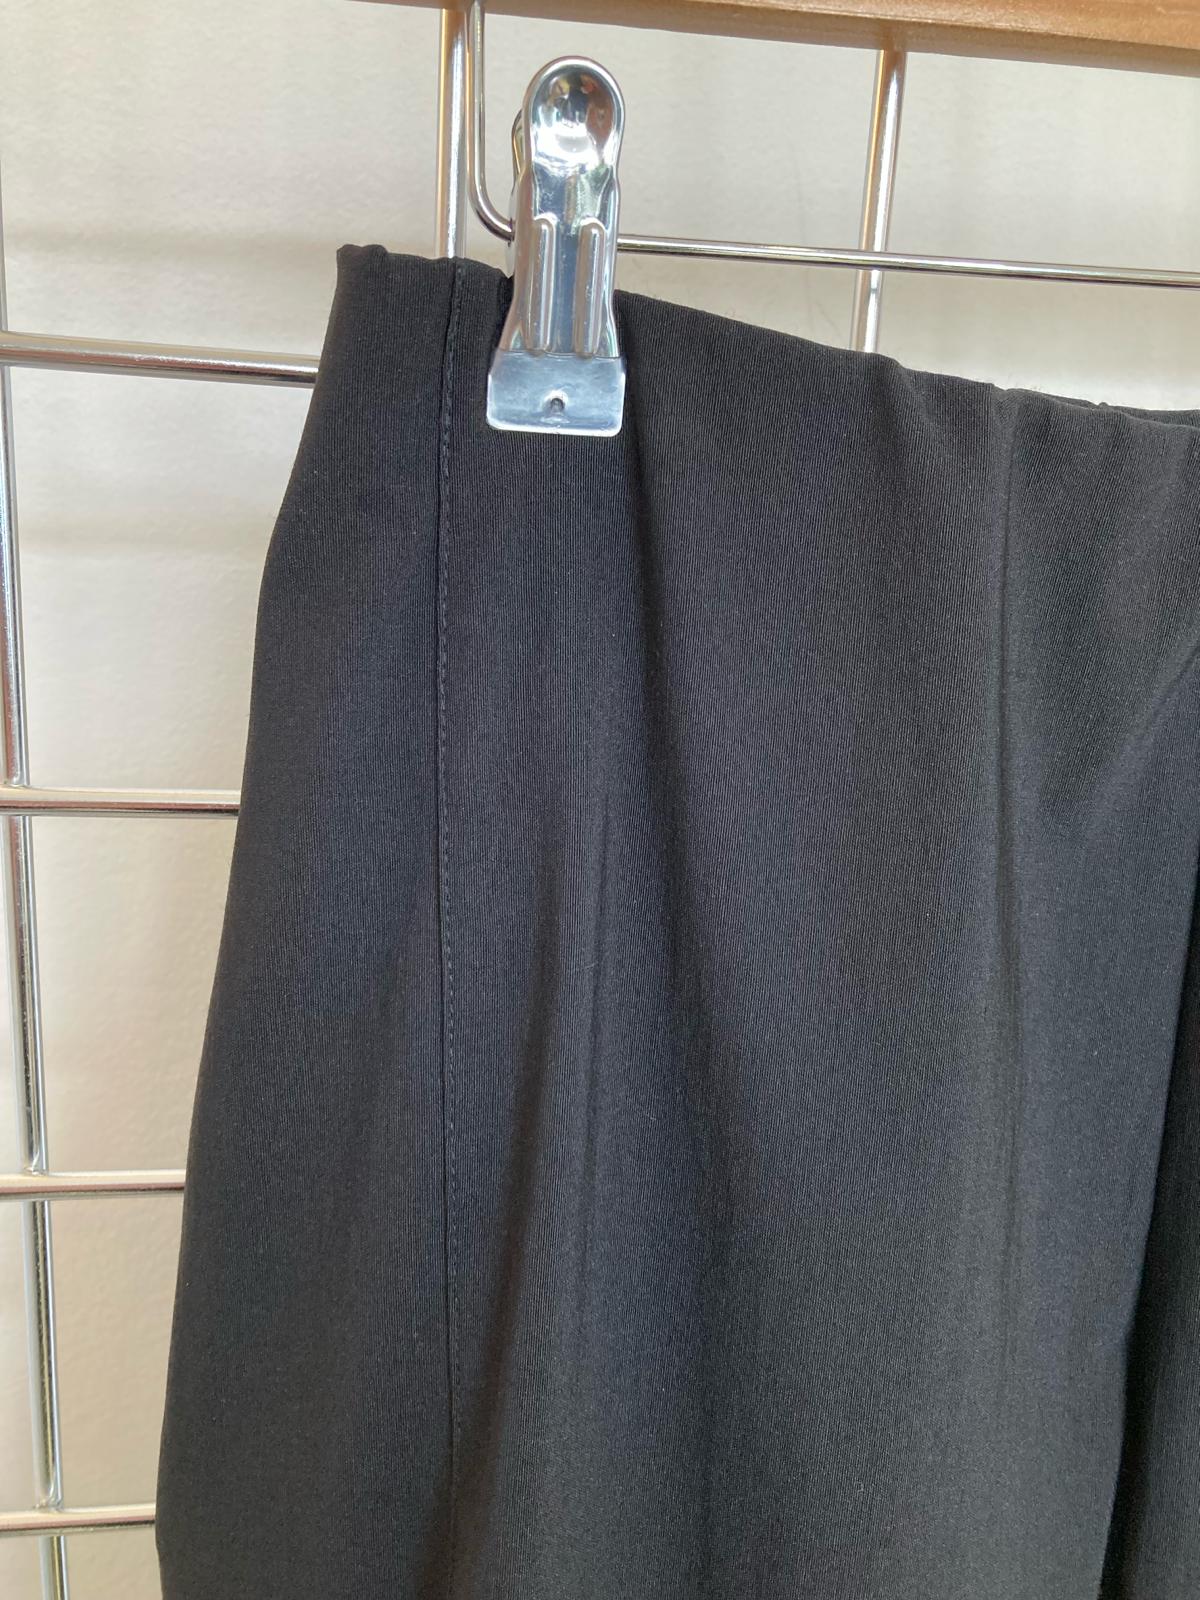 Black stretch zip pants - Maya Maya Ltd